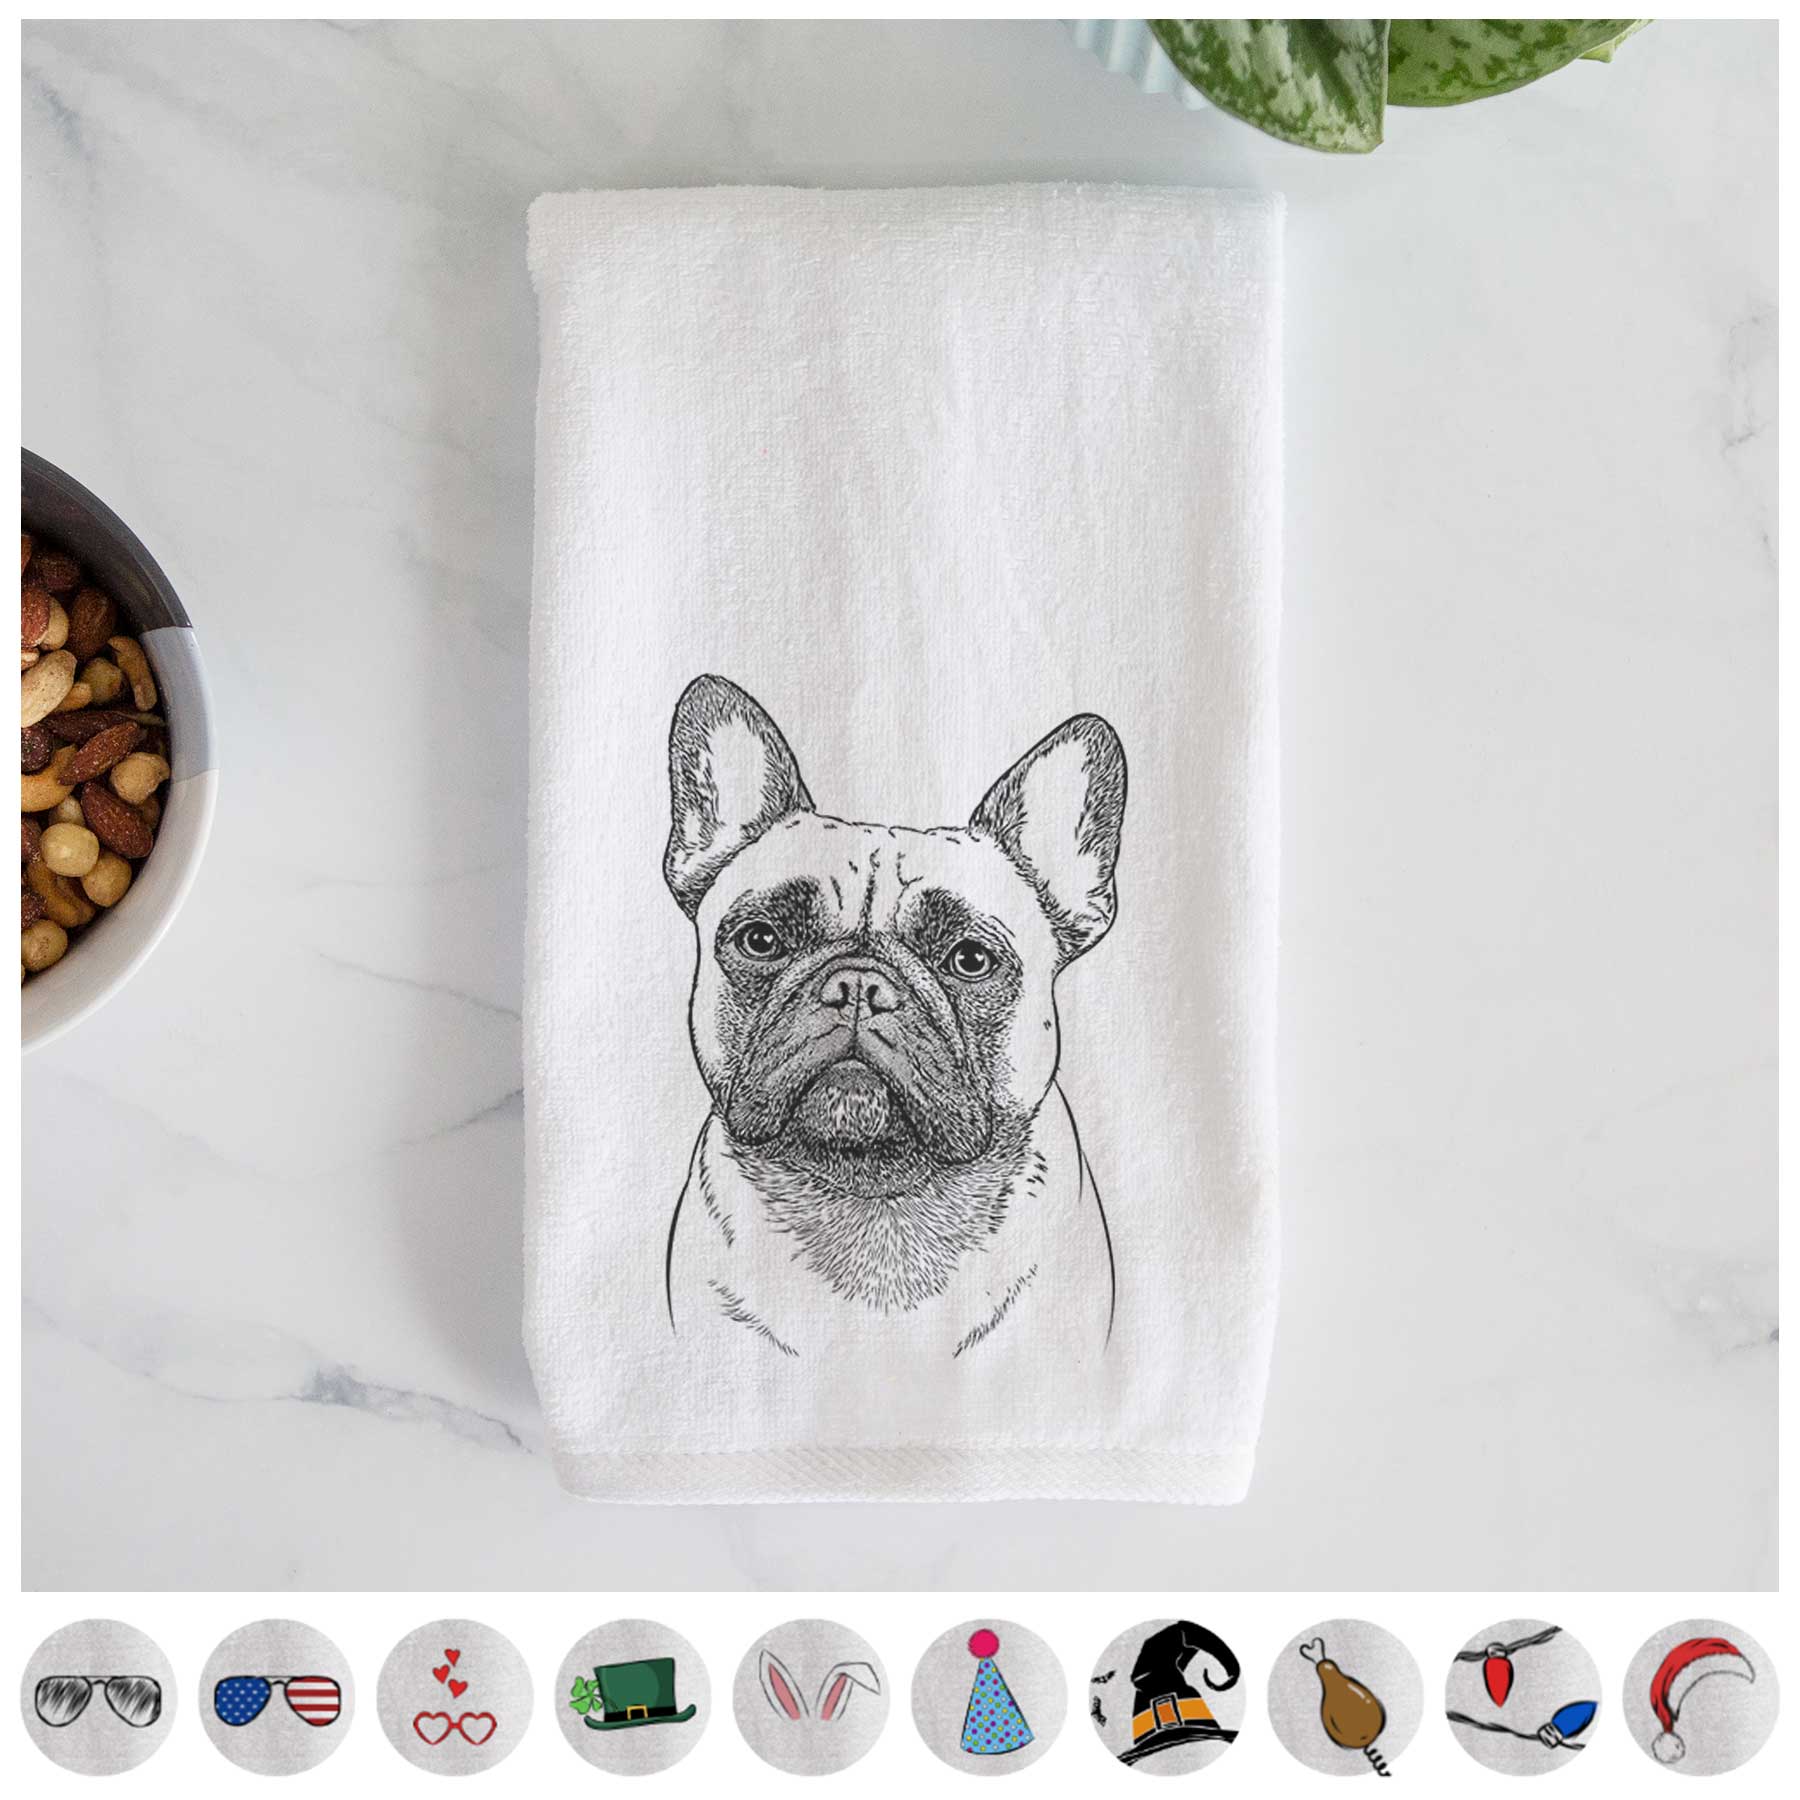 Kingsleigh the French Bulldog Hand Towel